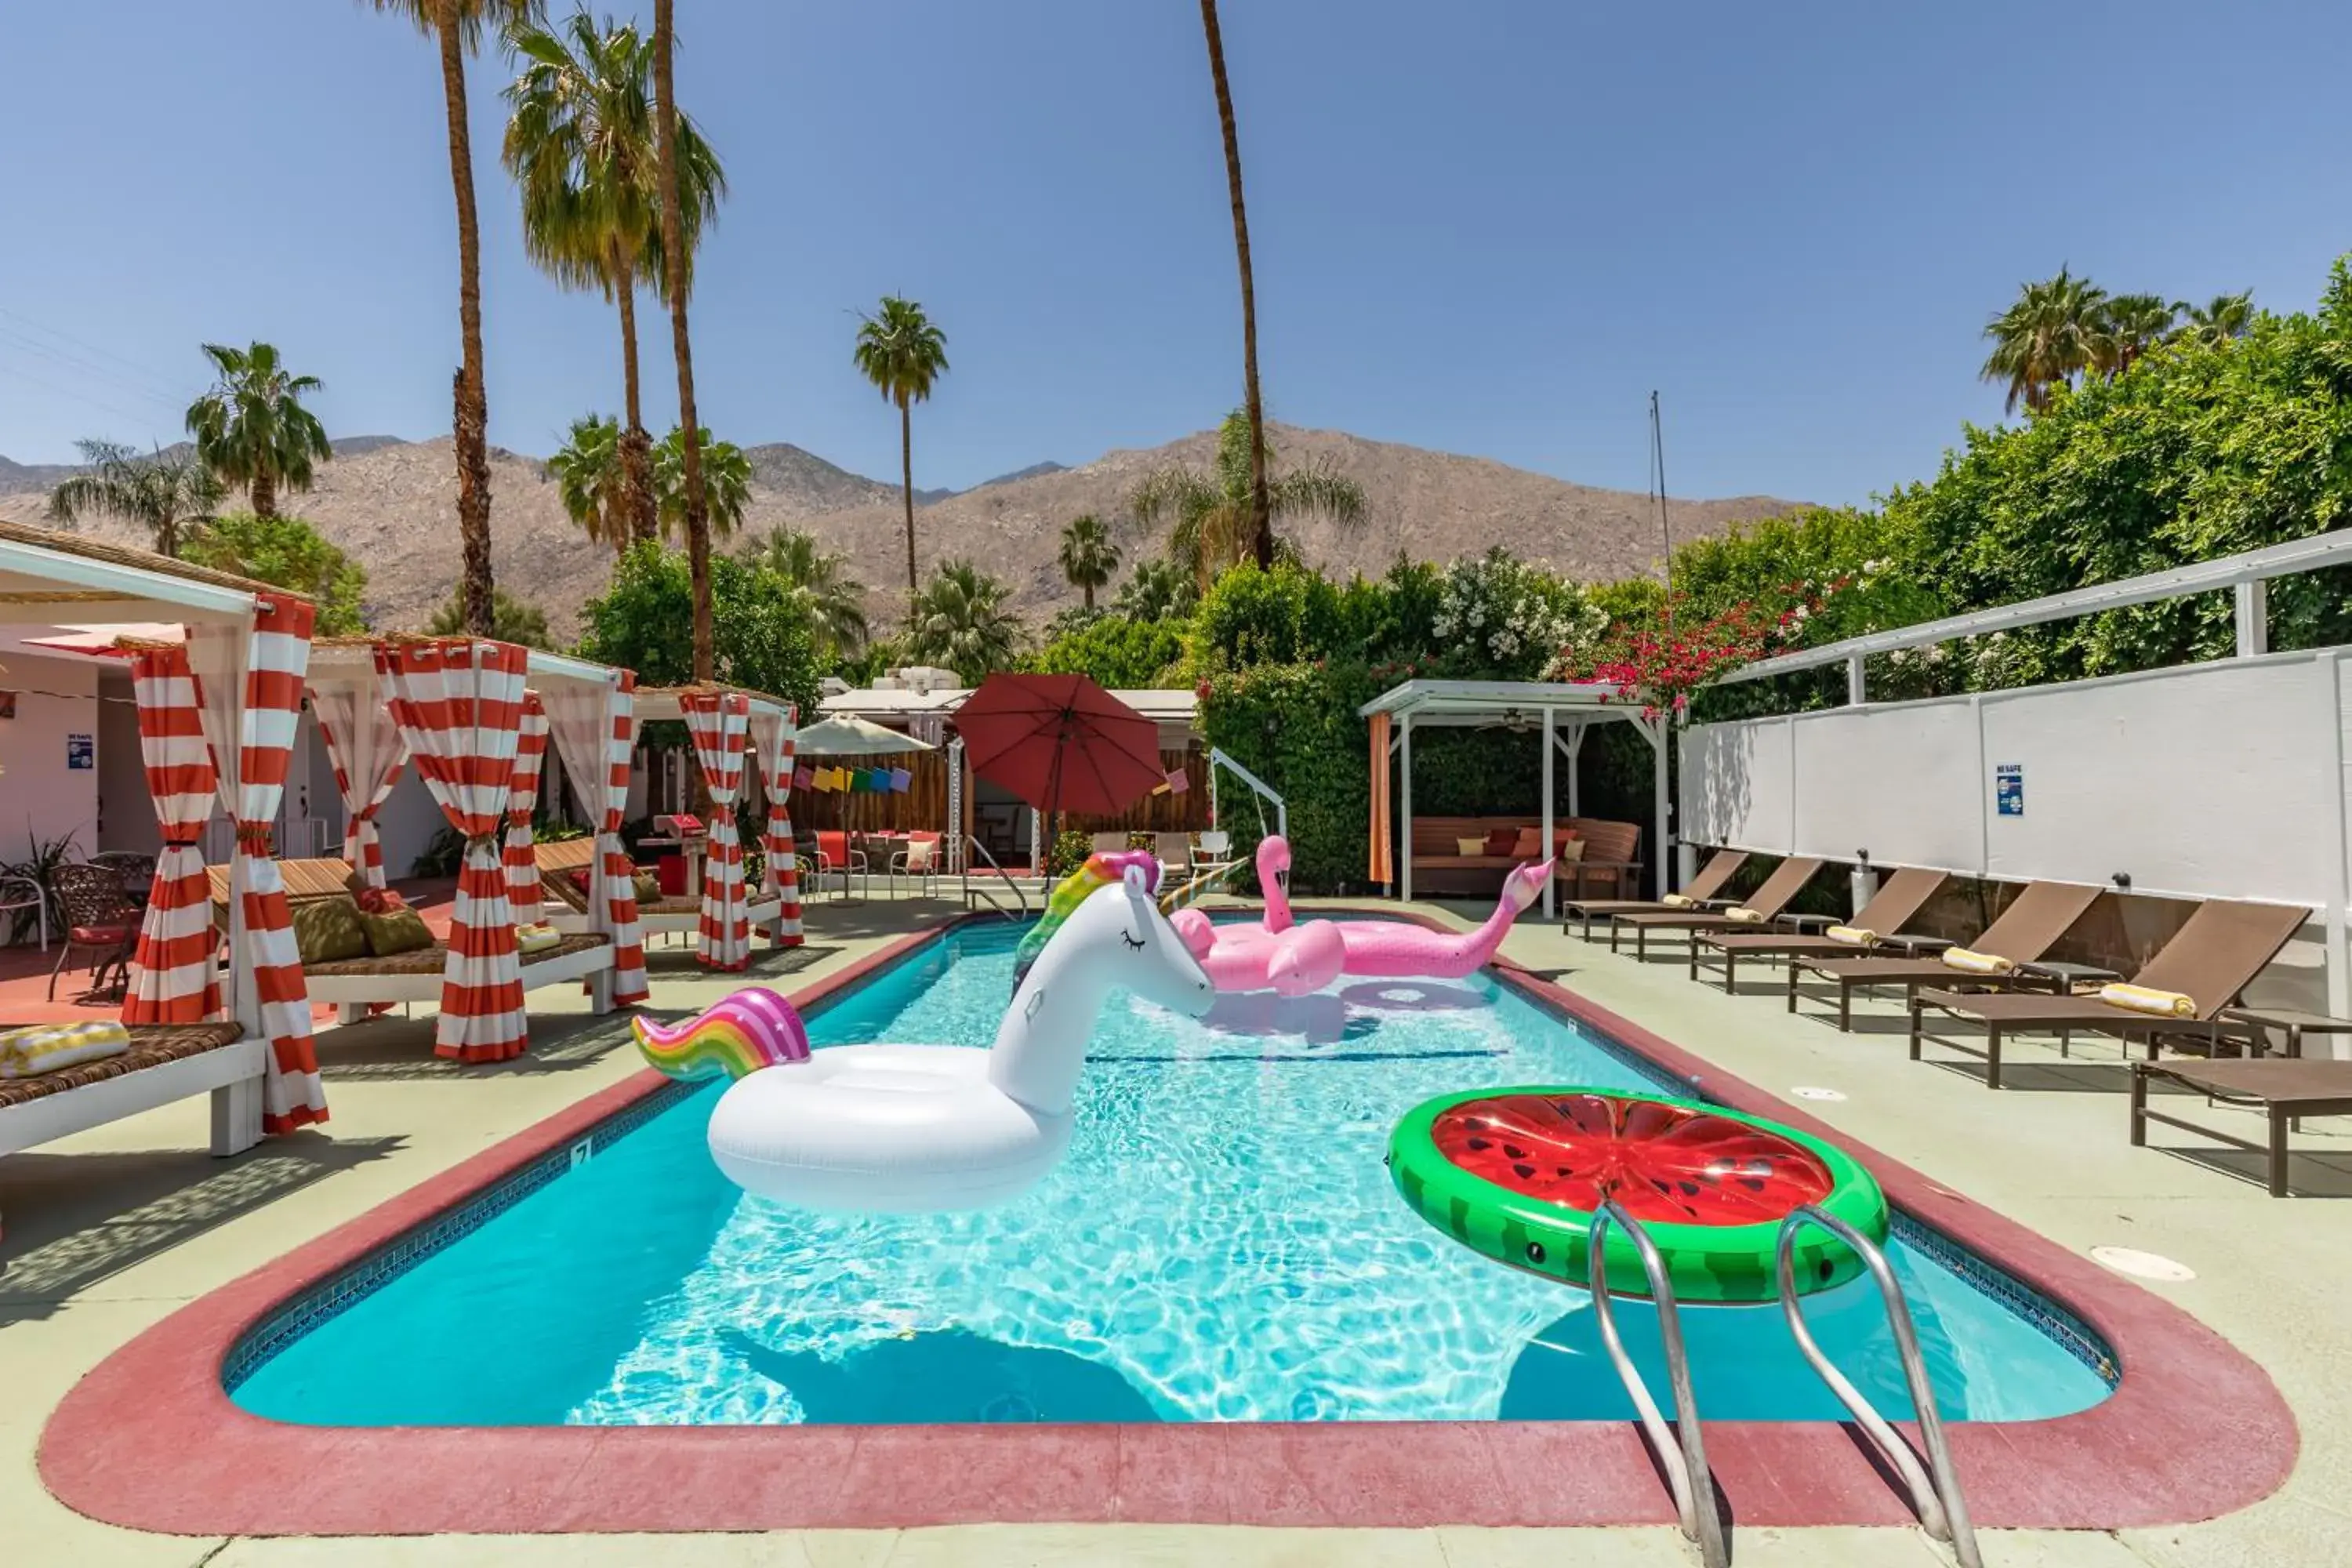 Pool view in Float Palm Springs